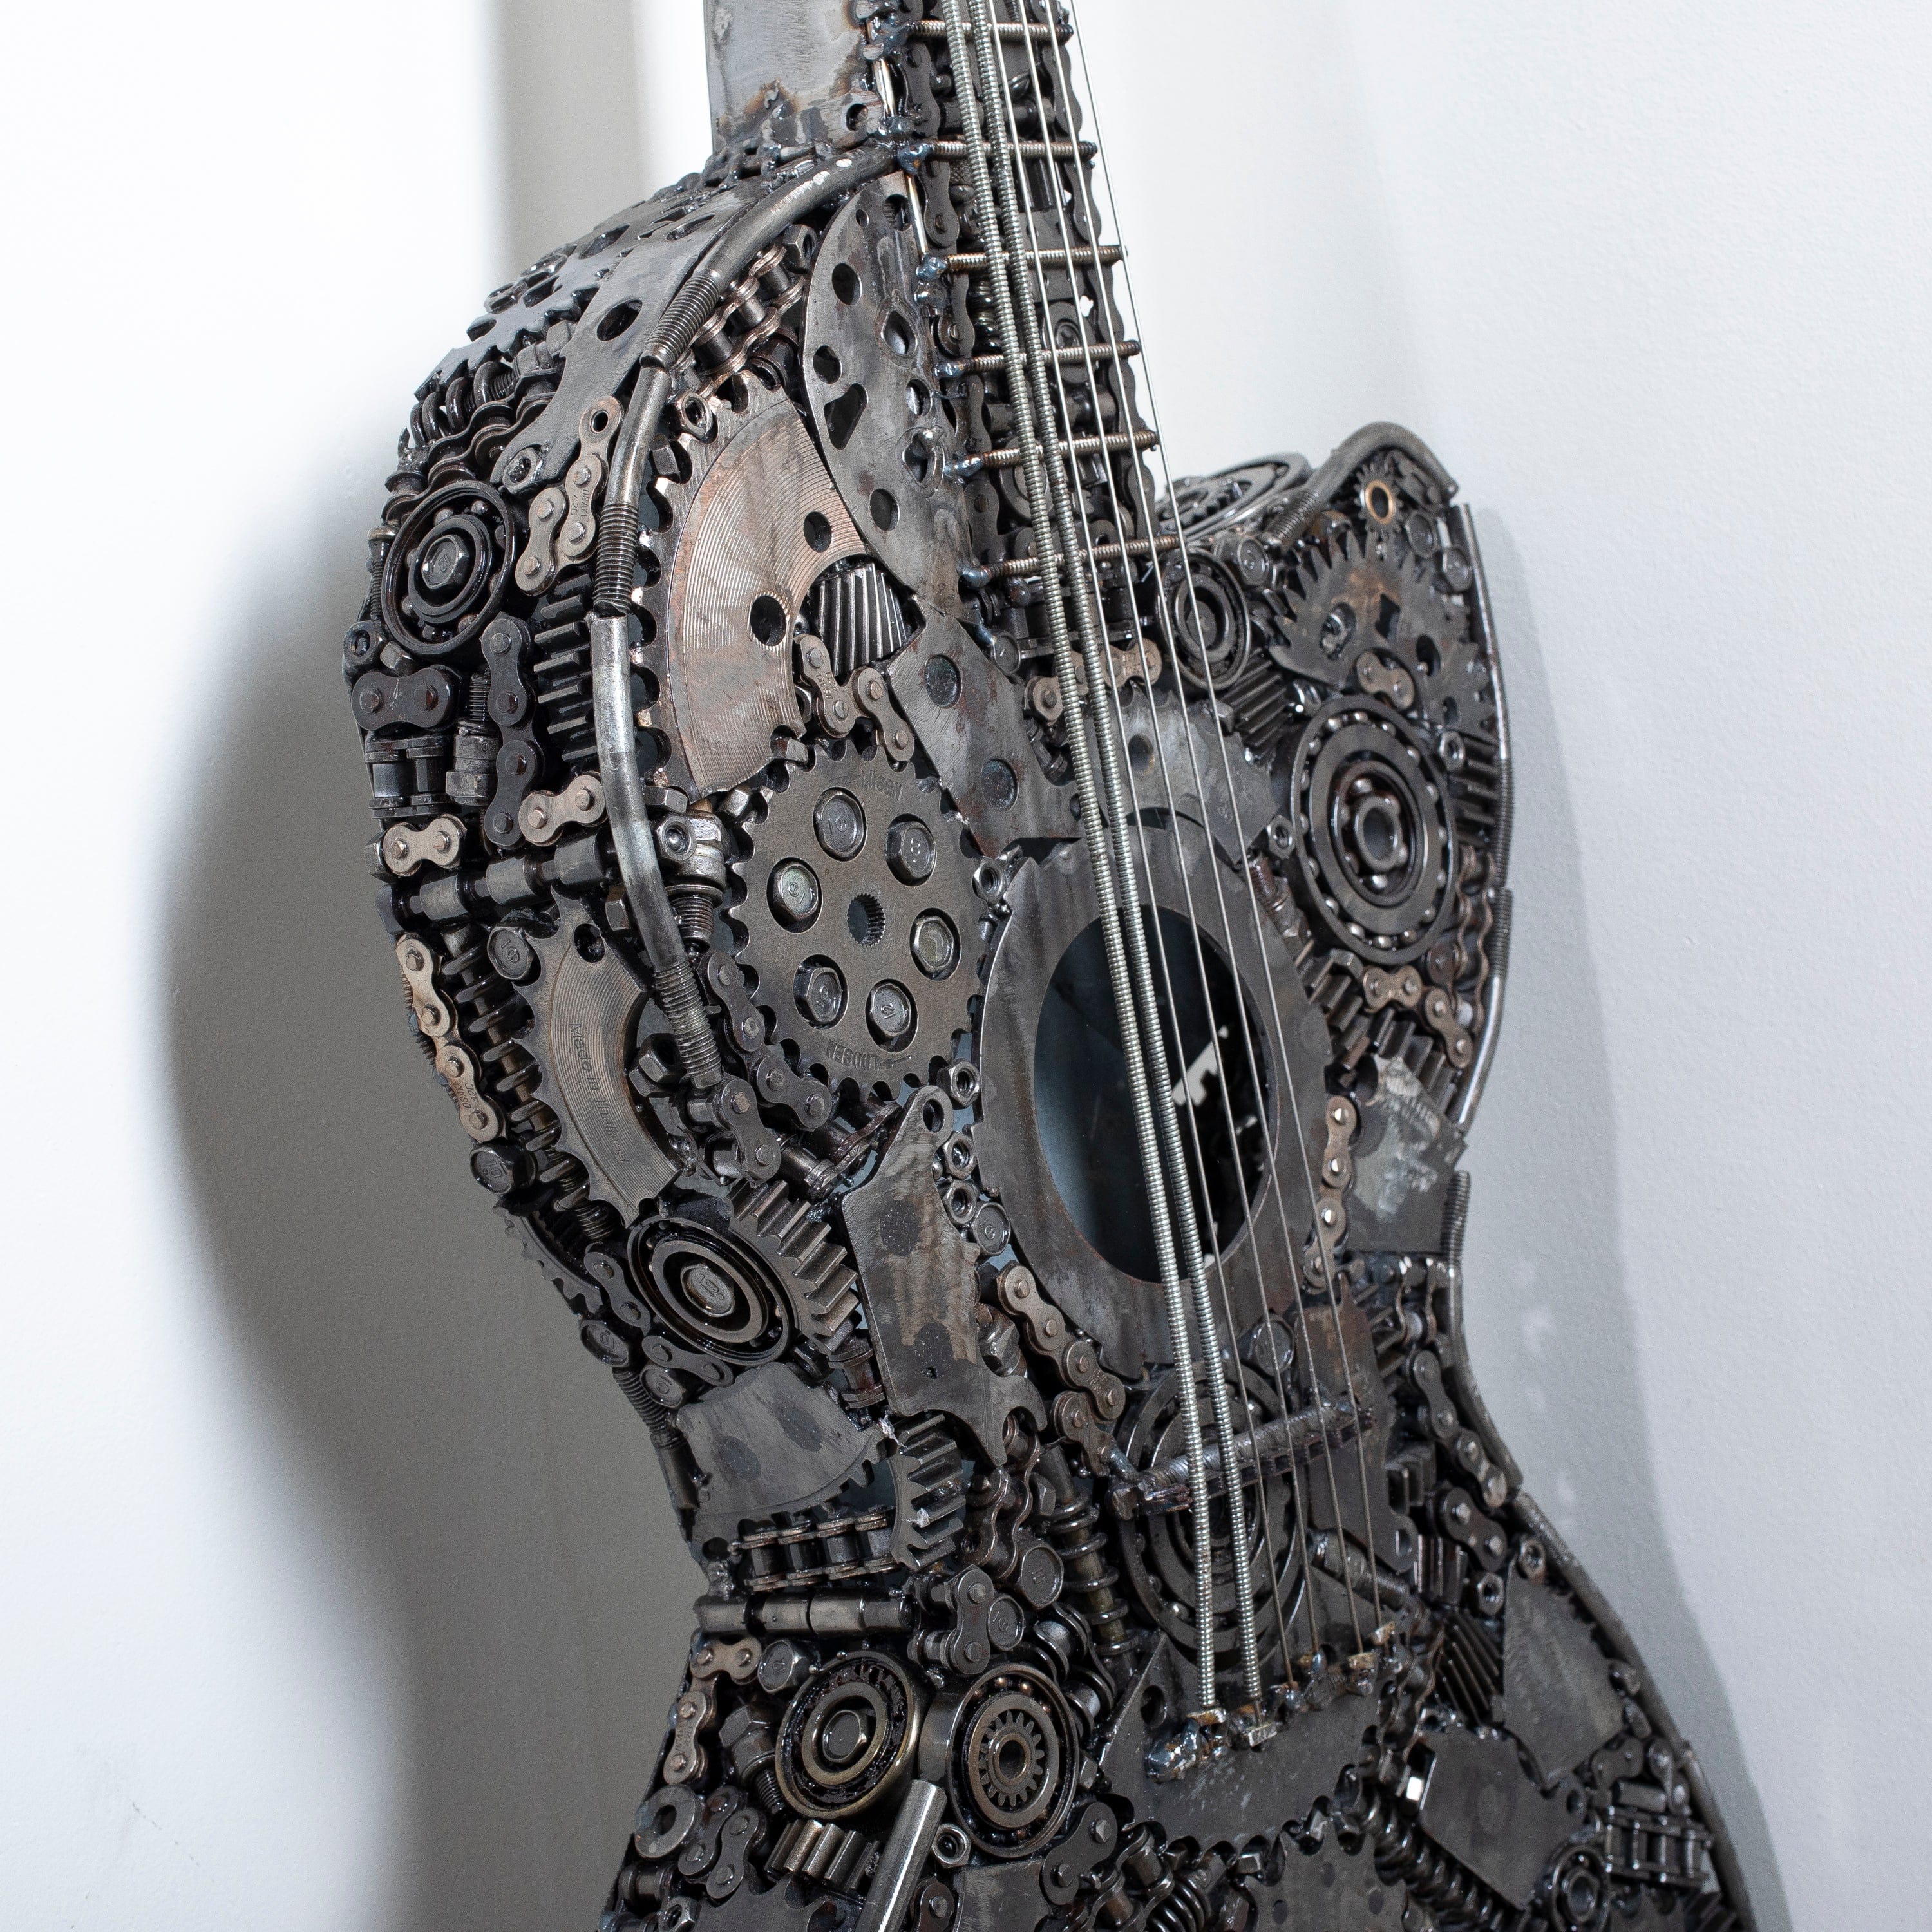 KALIFANO Recycled Metal Art 48" Guitar Inspired Recycled Metal Art Sculpture RMS-GT123-PK